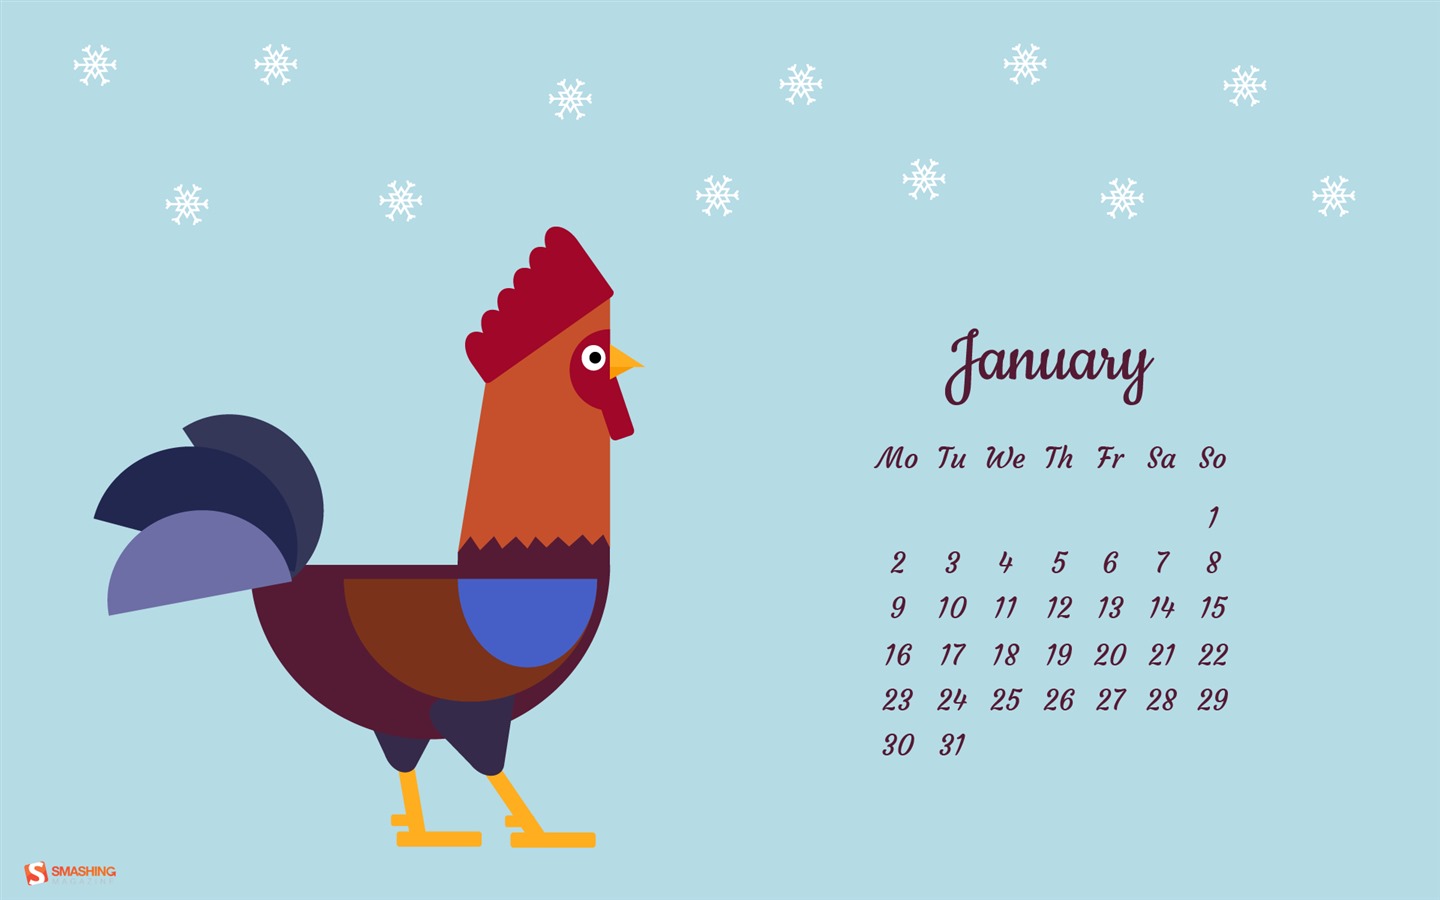 Fondos de calendario de enero de 2017 (2) #15 - 1440x900